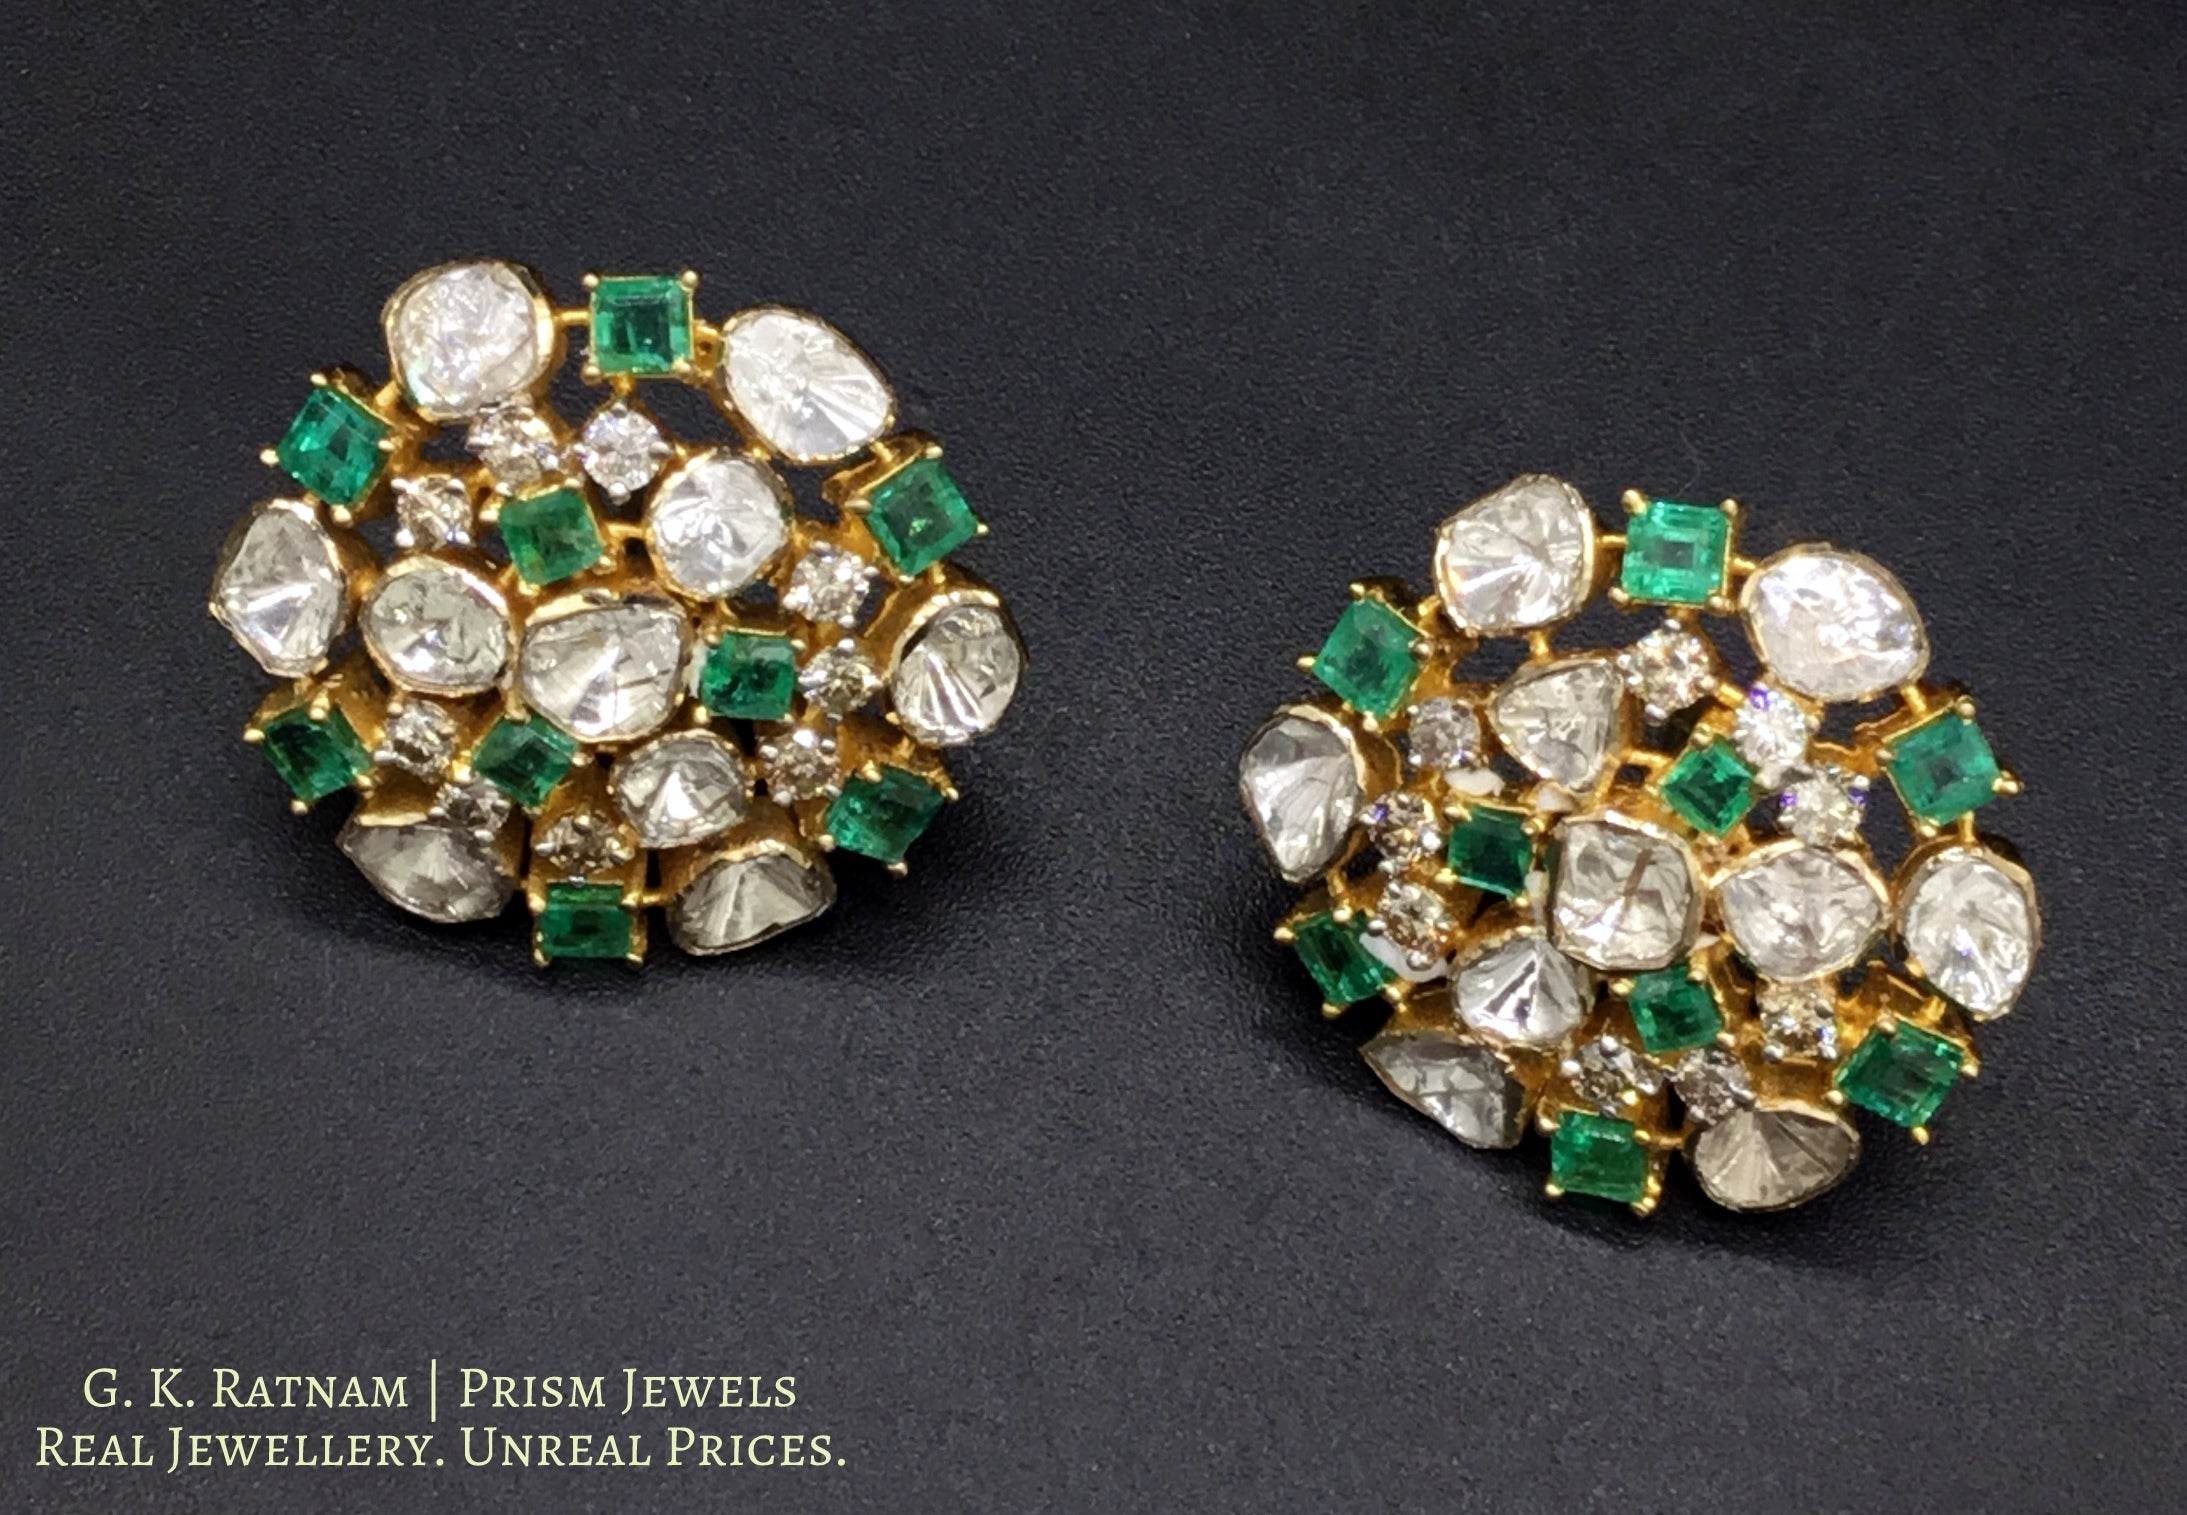 14k Gold and Diamond Polki Open Setting Karanphool Earring Pair with Natural Emerald Chawkis (squares) - gold diamond polki kundan meena jadau jewellery